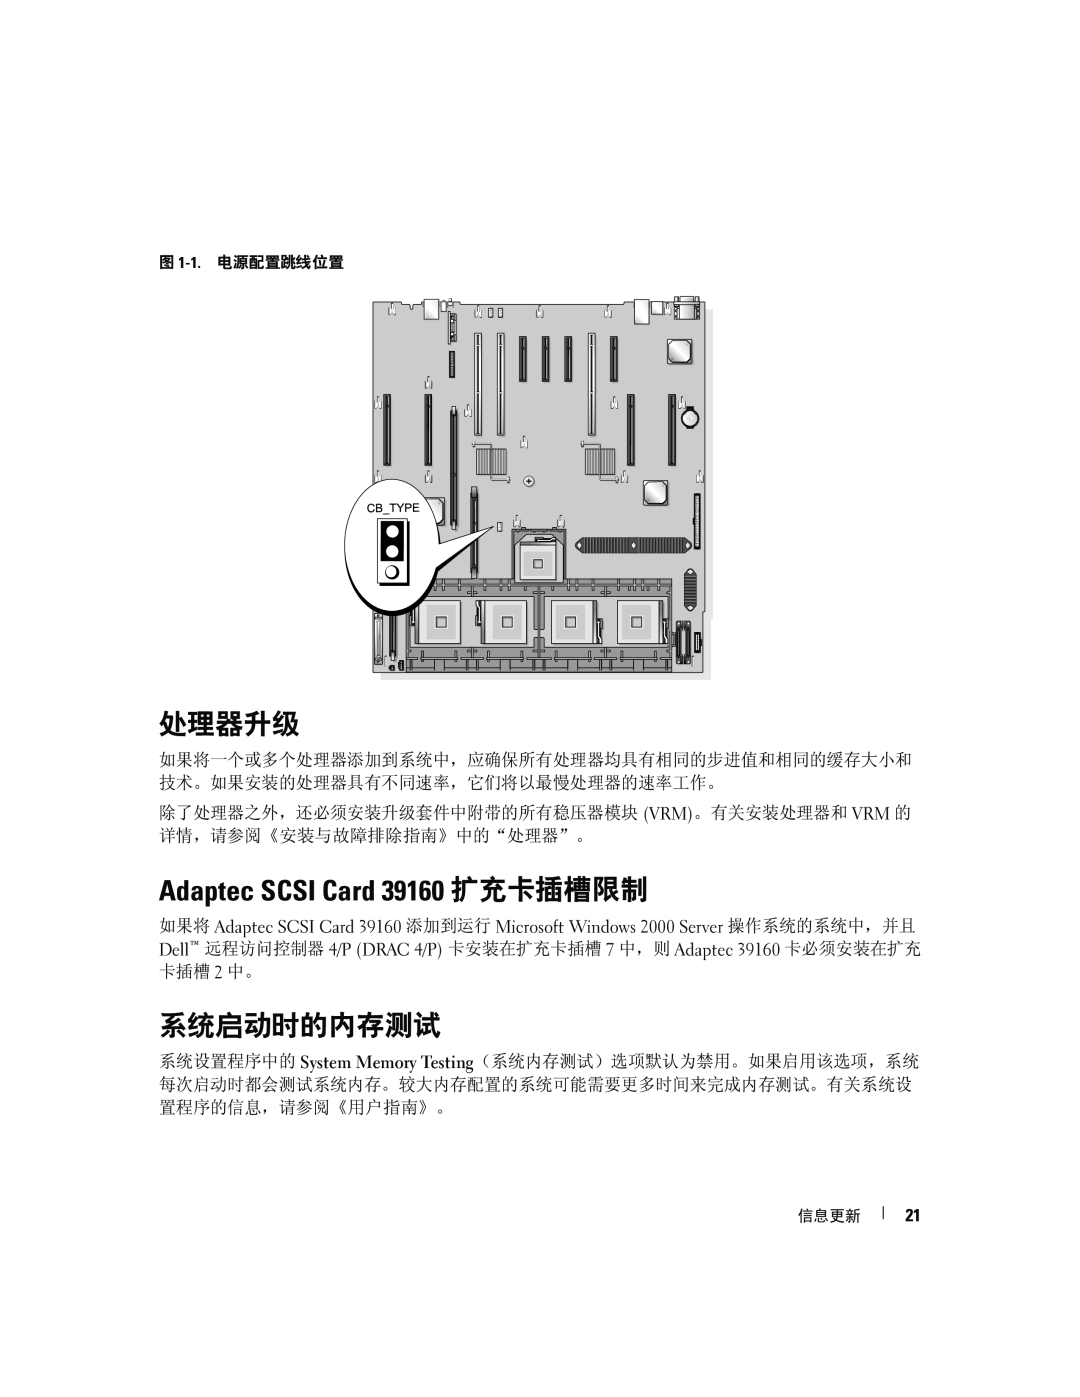 Dell 6800 manual 处理器升级, Adaptec SCSI Card 39160 扩充卡插槽限制, 系统启动时的内存测试 